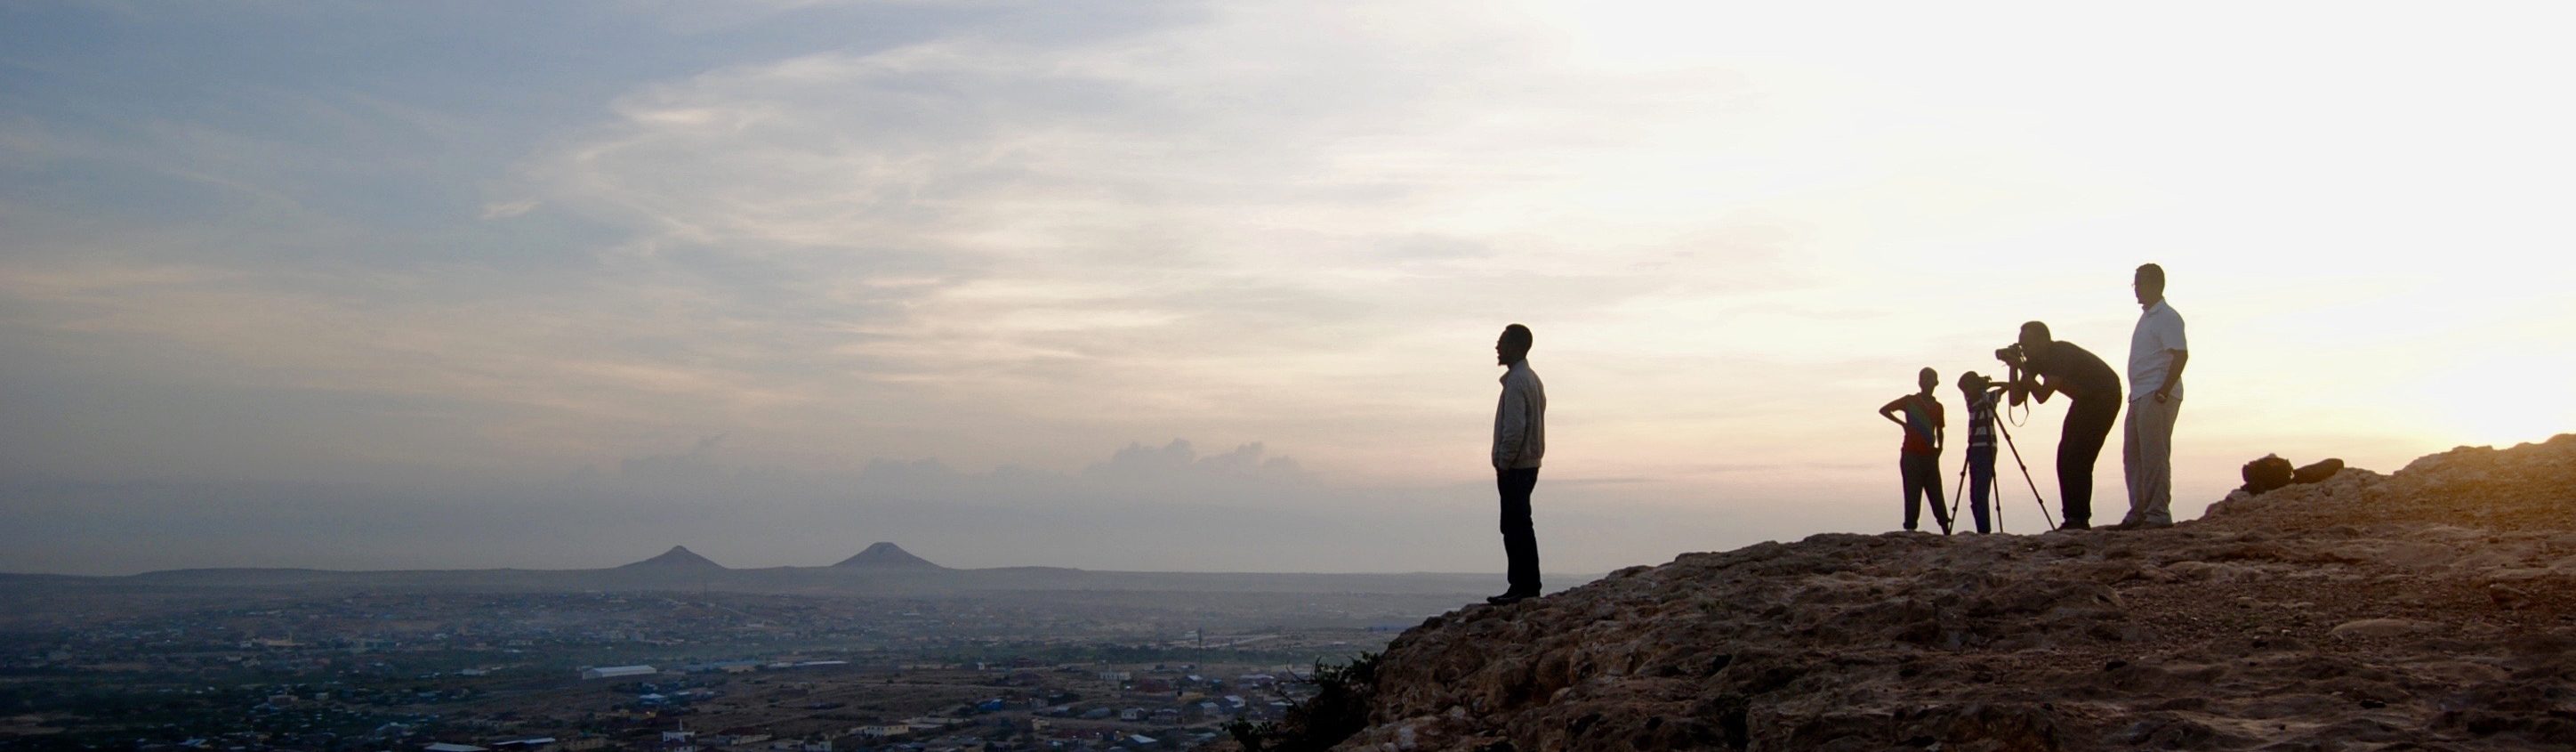 Documenting Hargeysa, Somaliland (Christina Woolner, 2017)